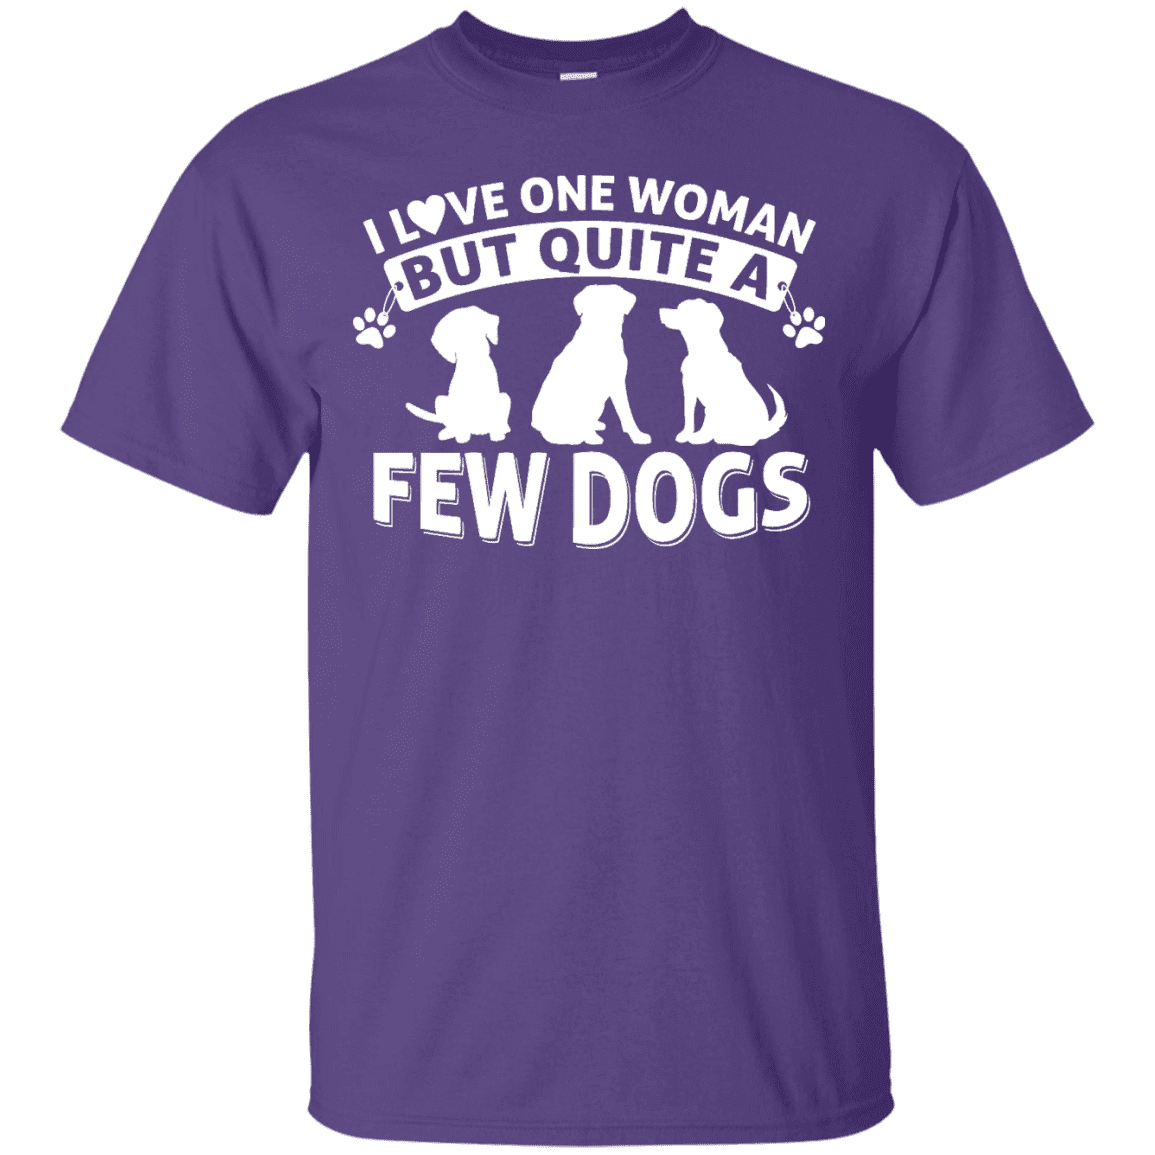 Love One Woman Few Dogs - T Shirt.